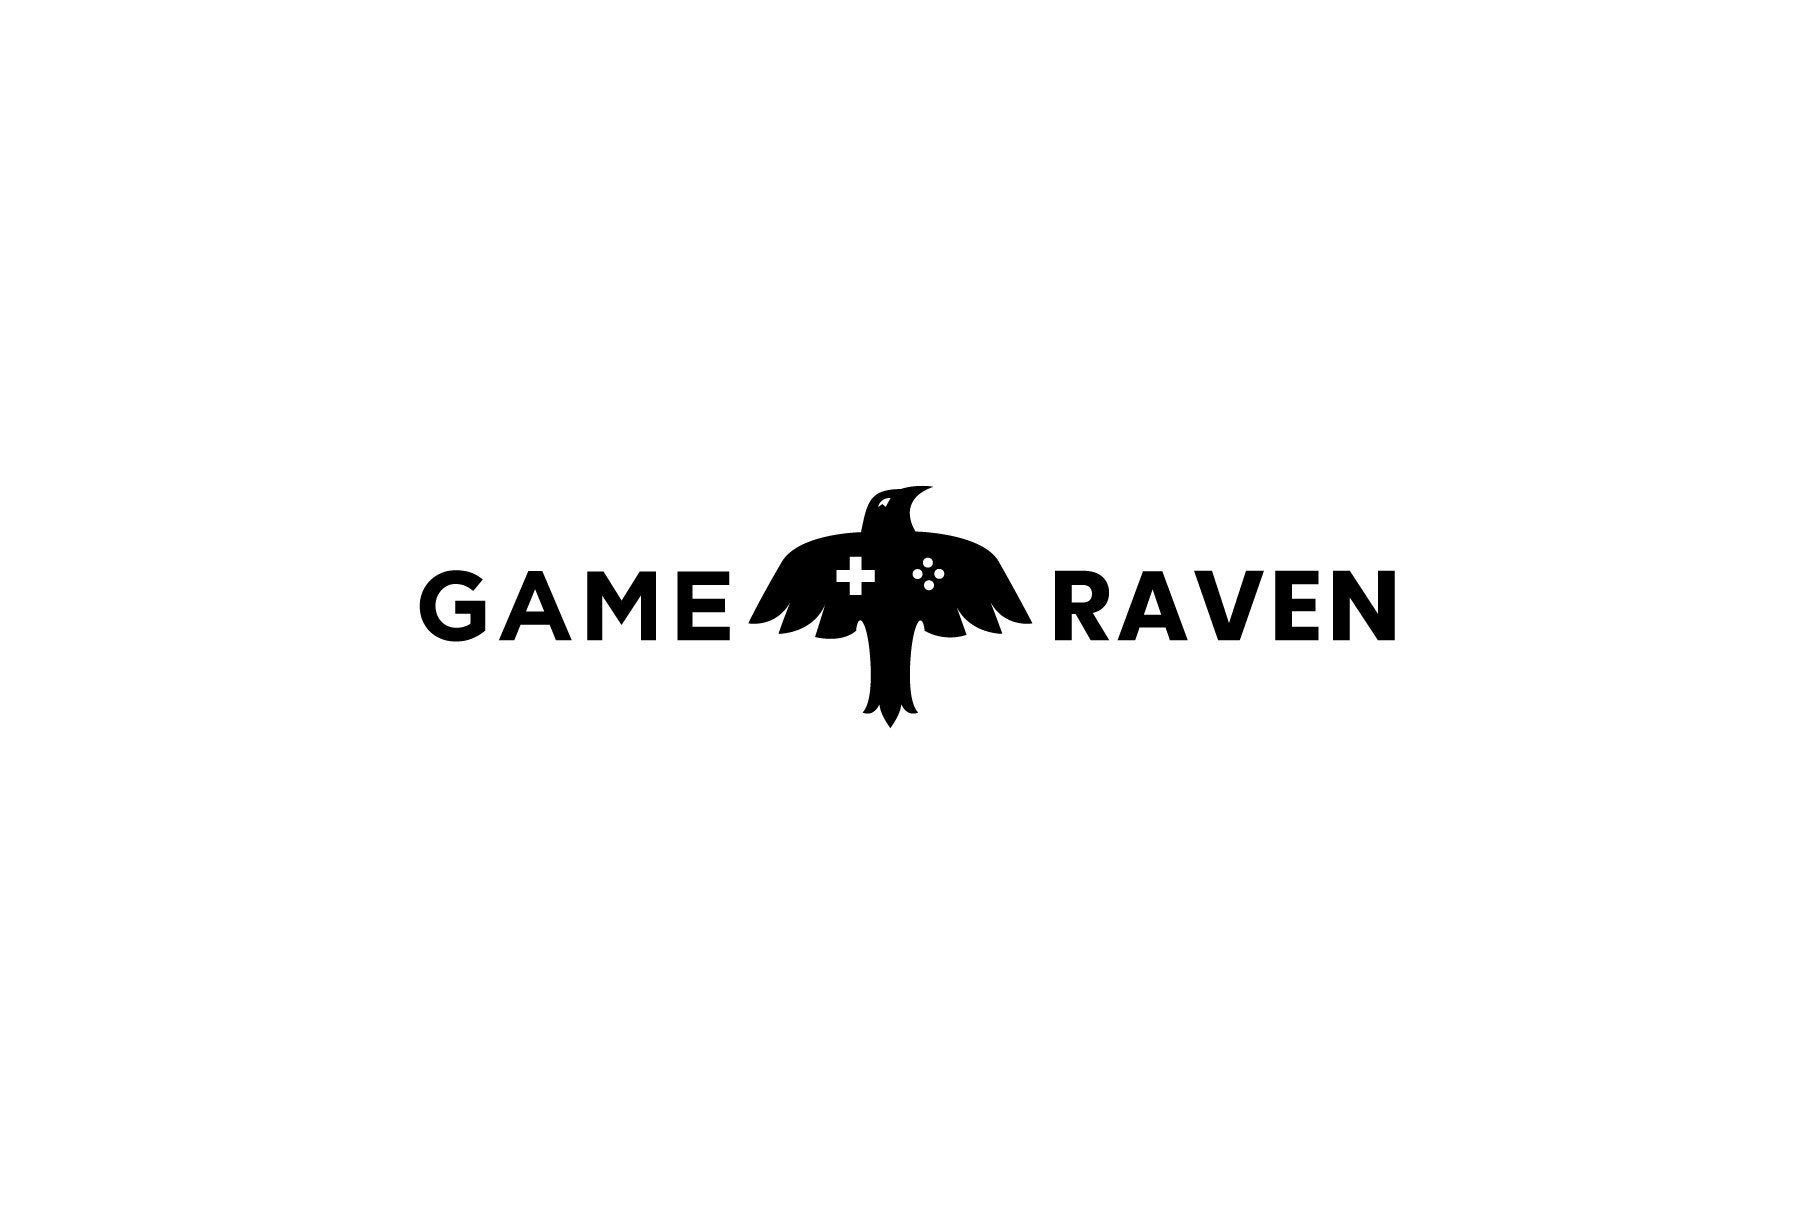 Game Raven logo cover image.